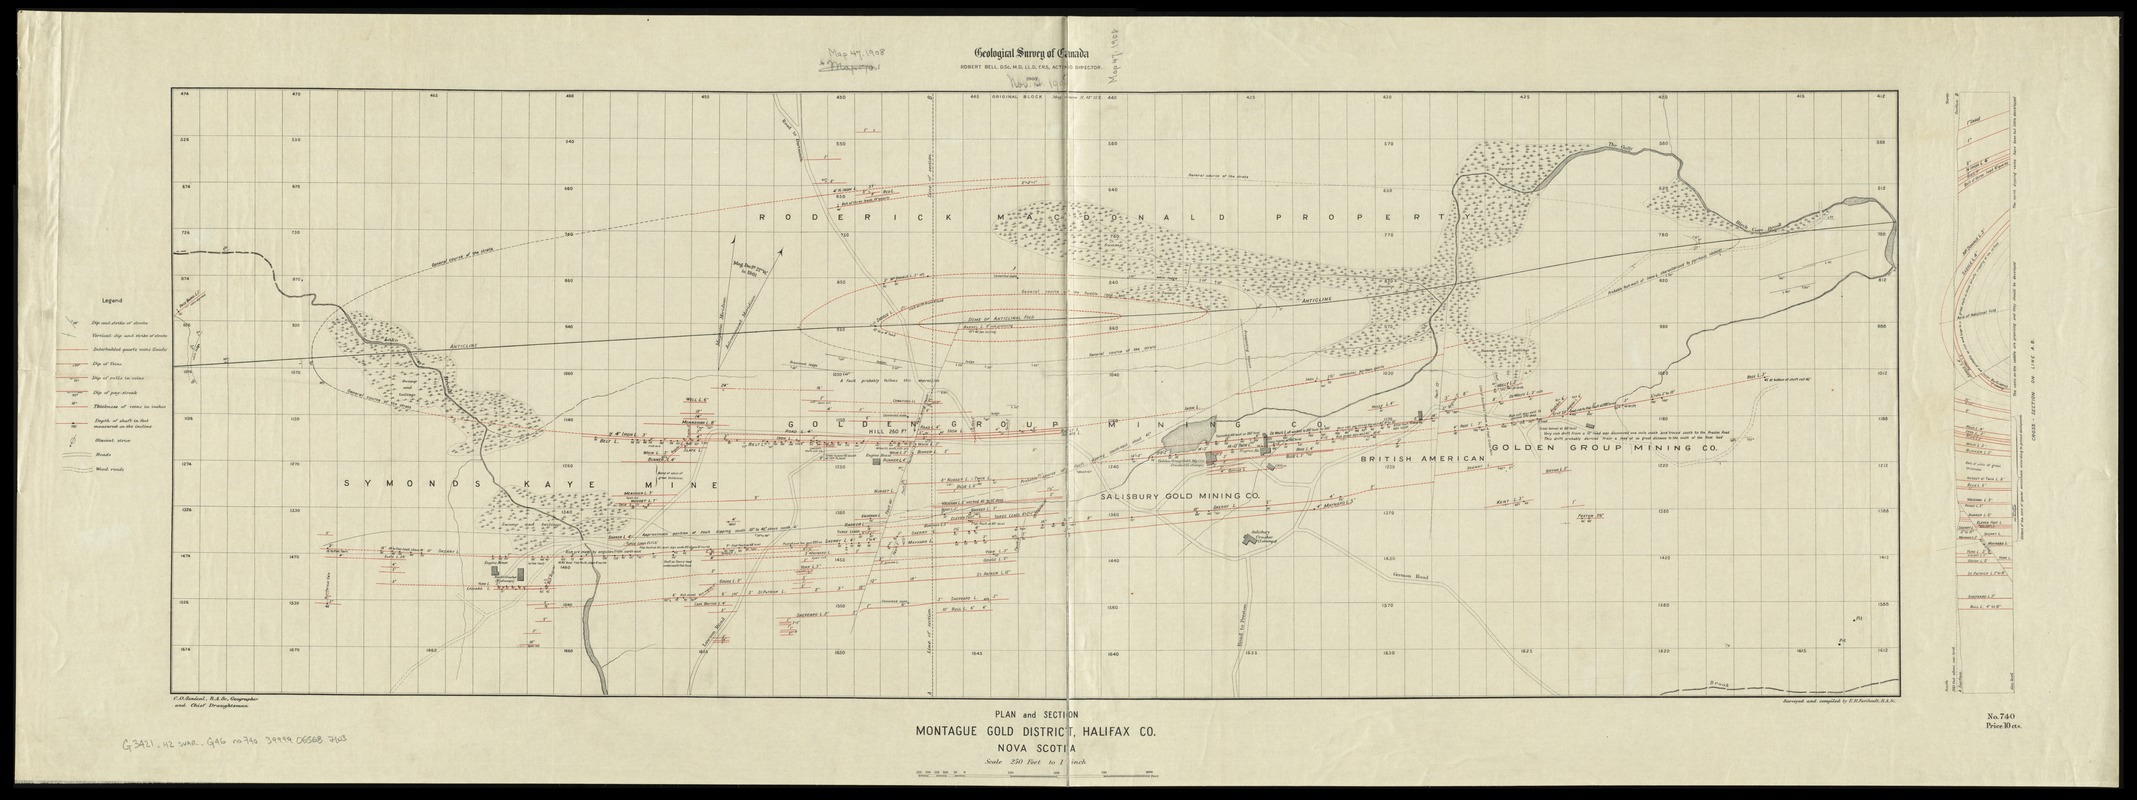 Plan and section, Montague gold district, Halifax Co., Nova Scotia